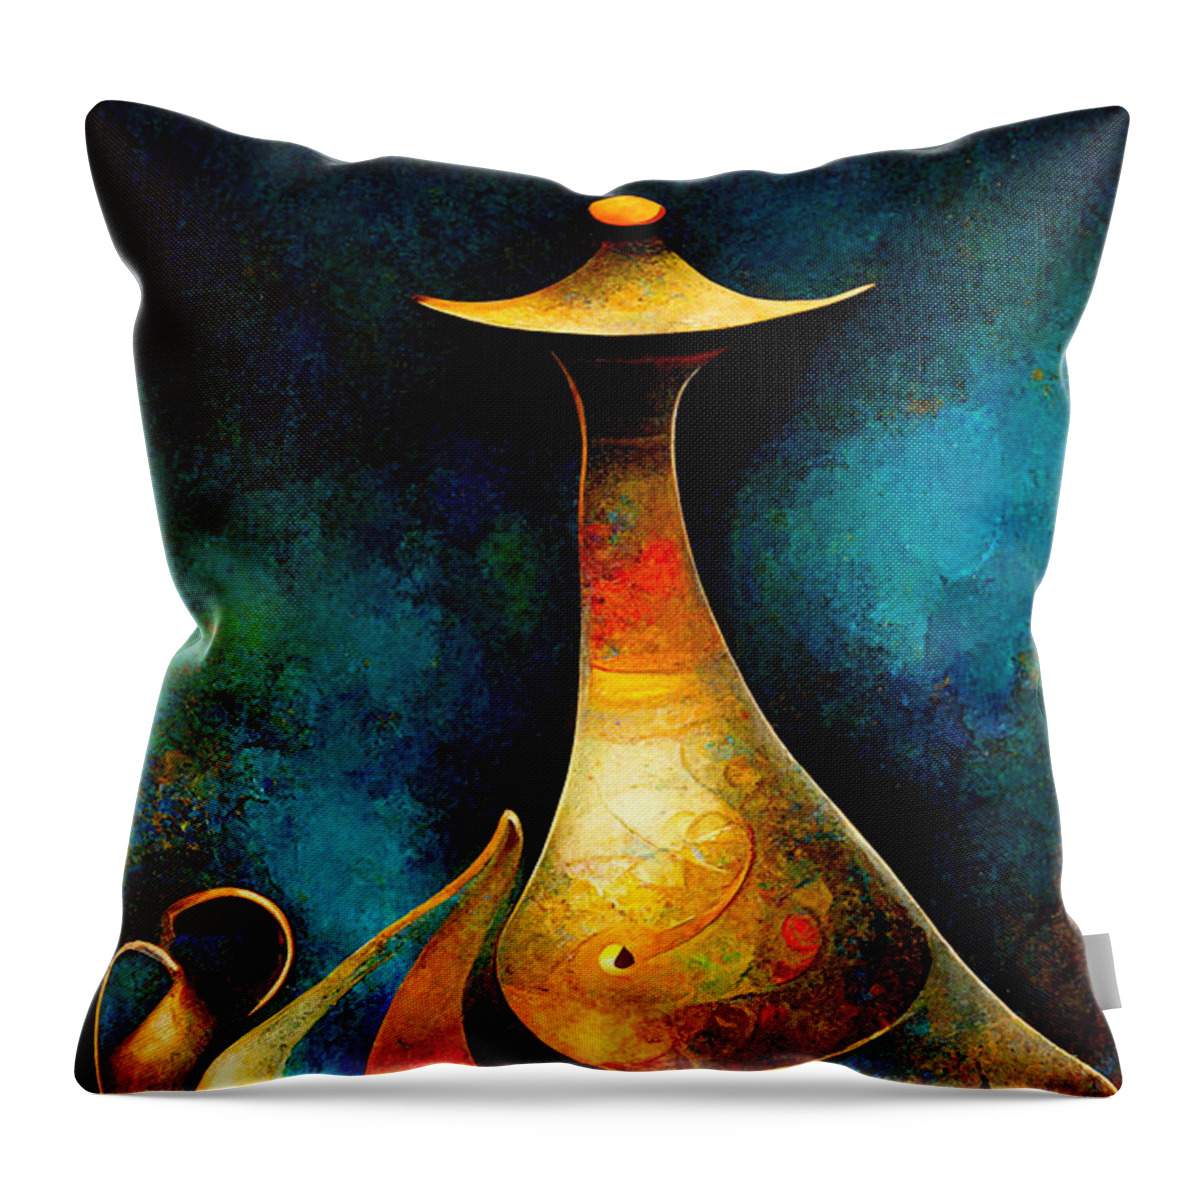 Aladdin Throw Pillow featuring the digital art 1001 Nights by Sabantha